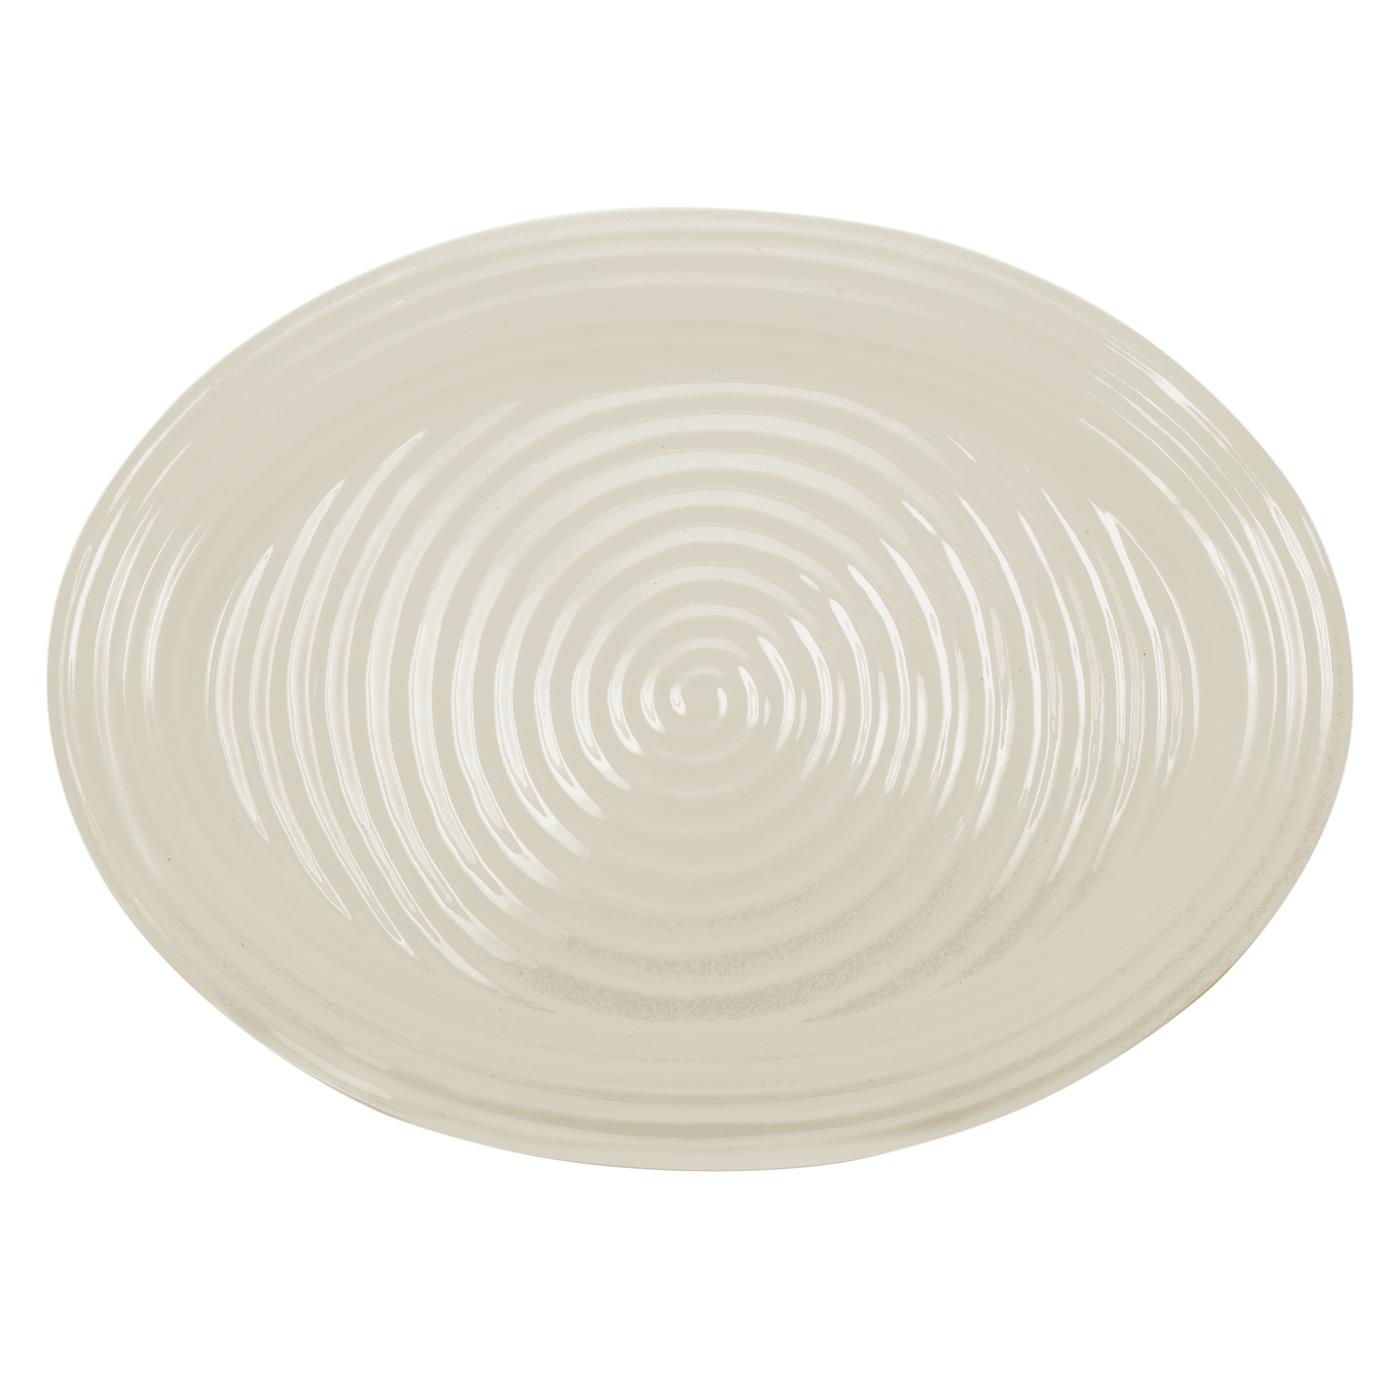 Sophie Conran Pebble Medium Oval Platter image number null